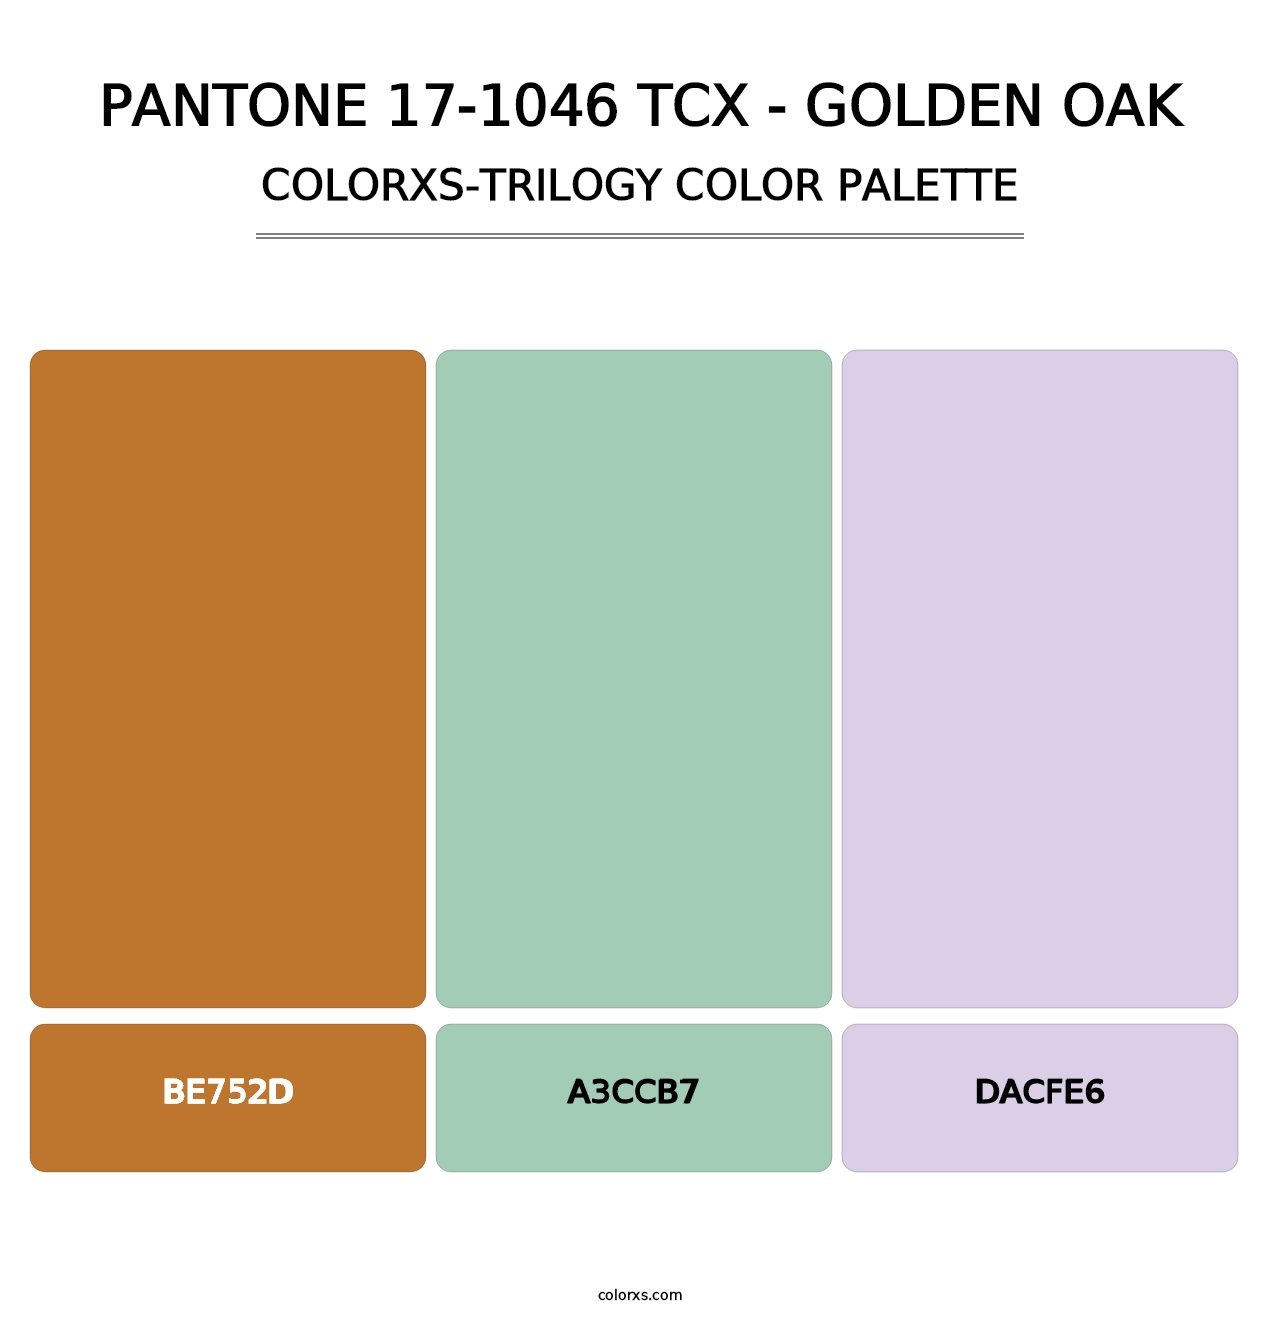 PANTONE 17-1046 TCX - Golden Oak - Colorxs Trilogy Palette